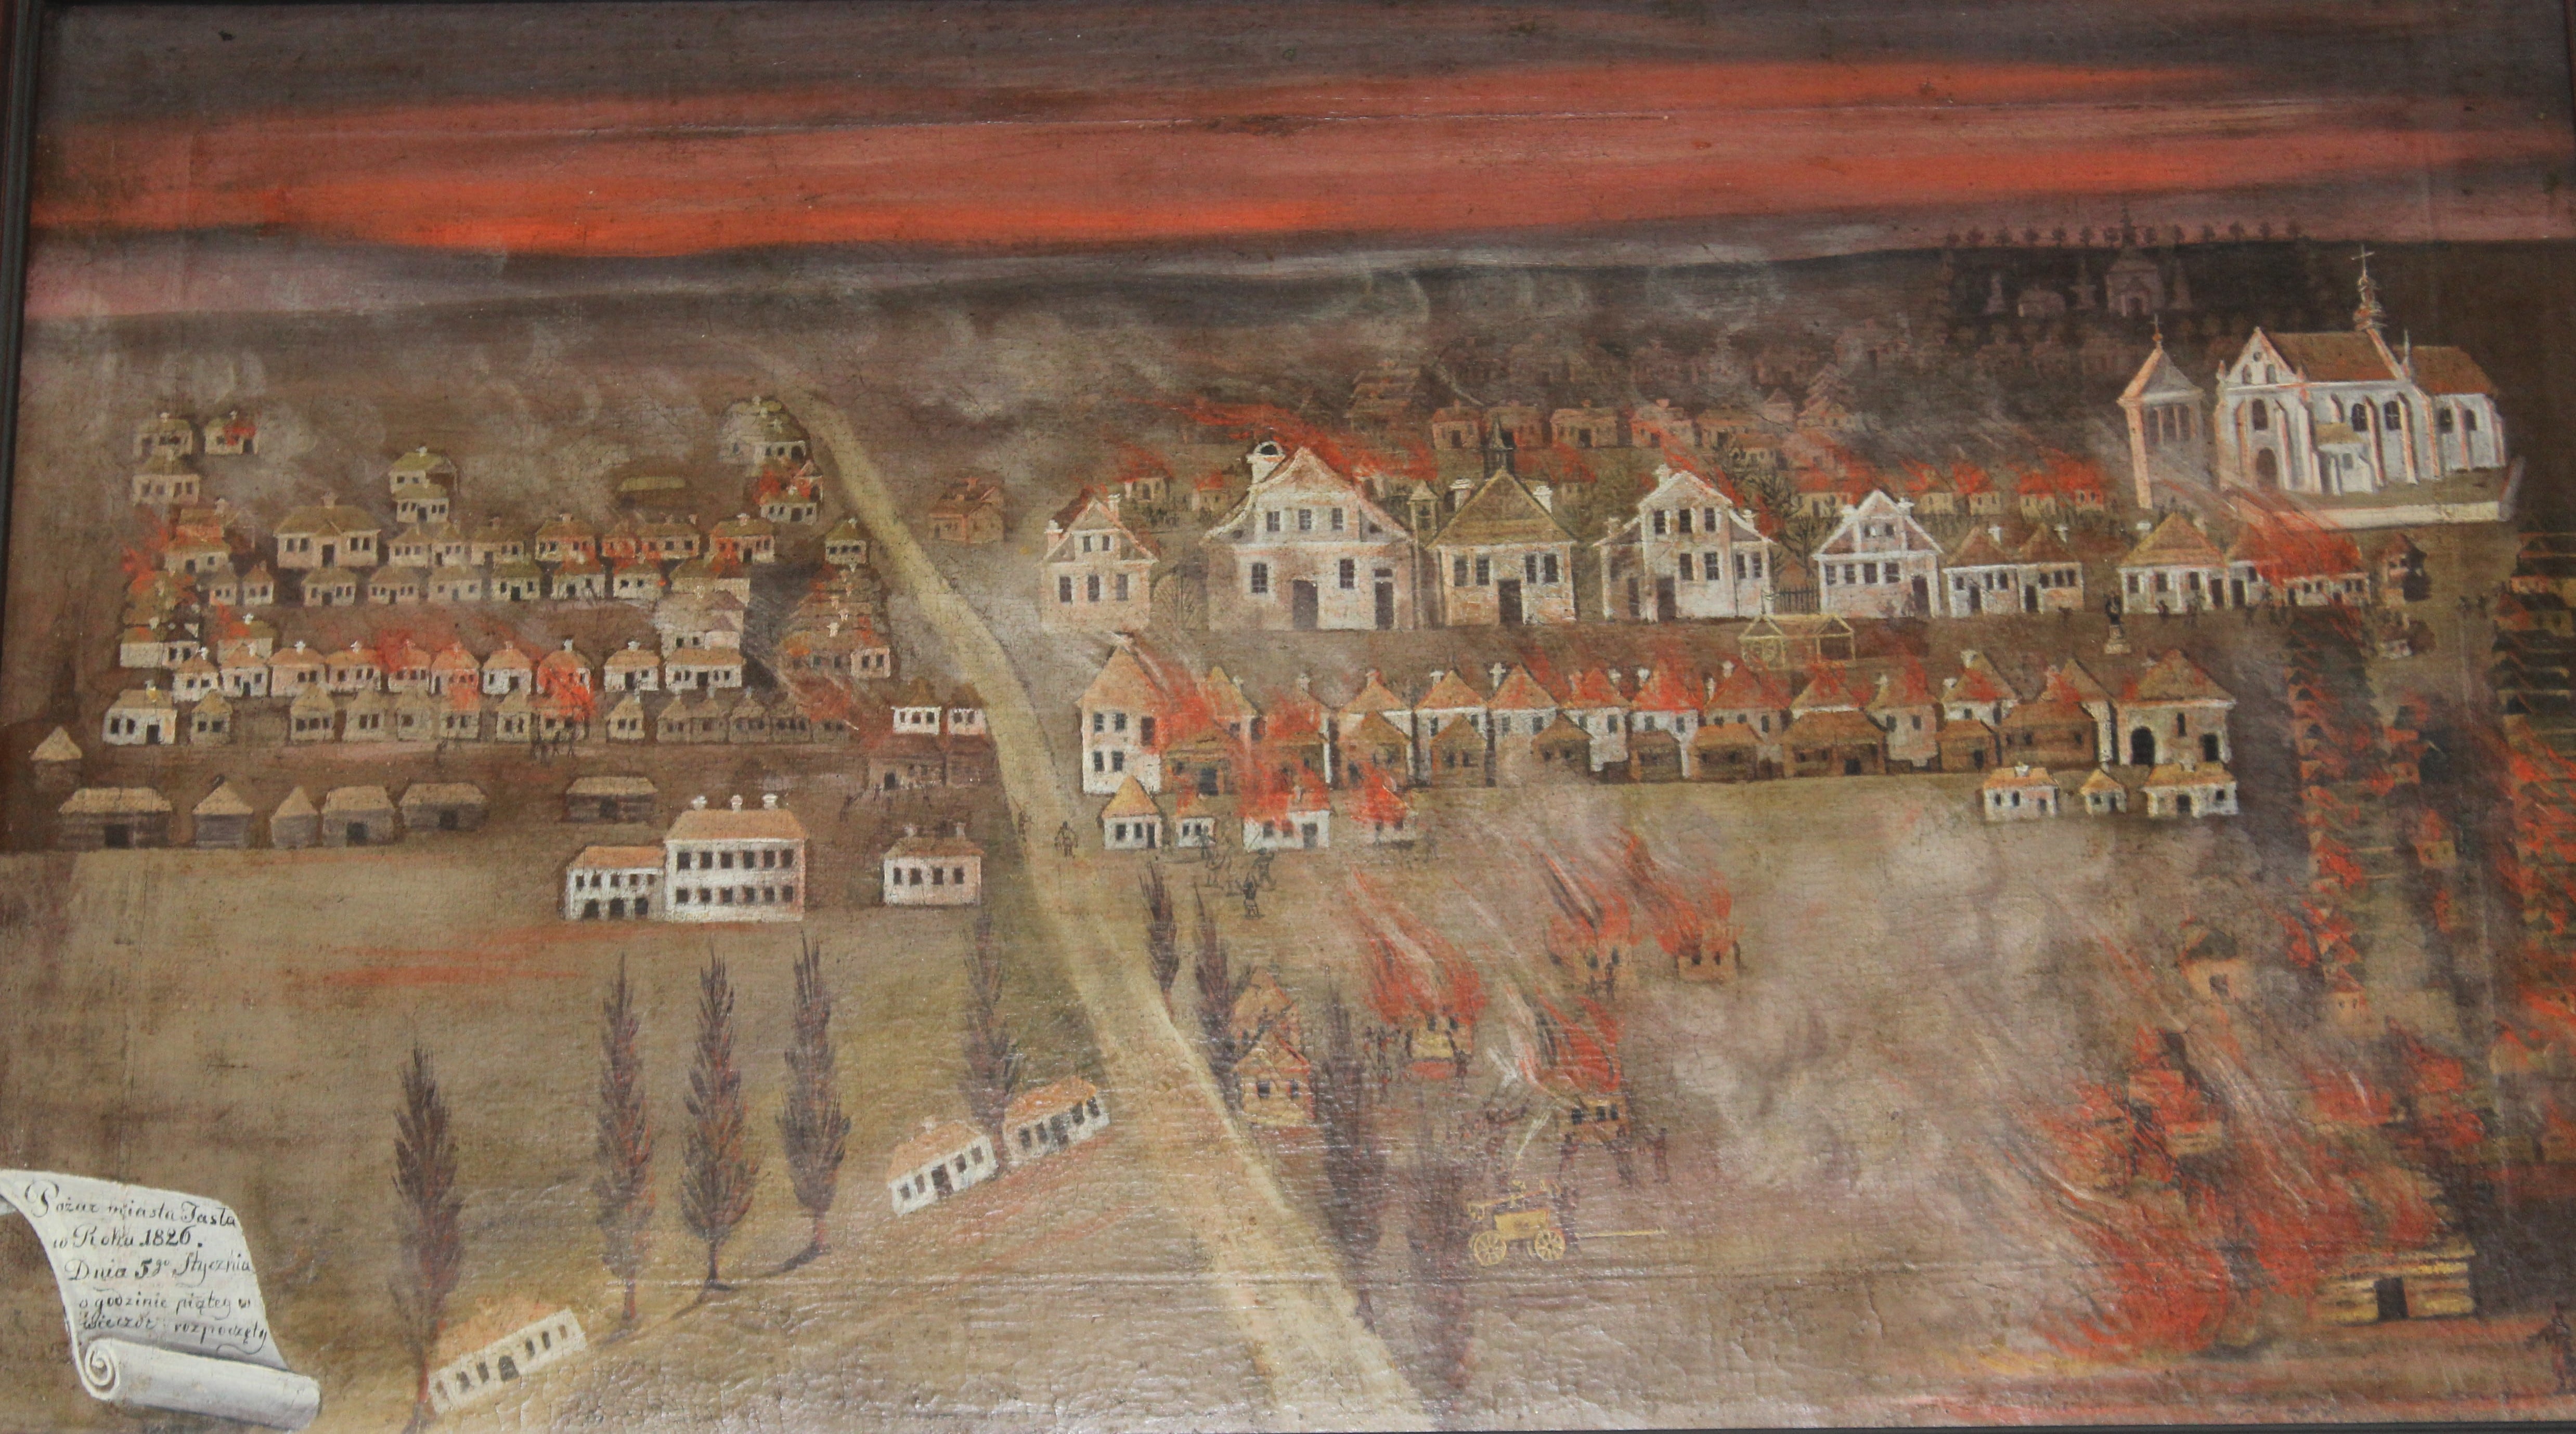 01 - Jan Seweryn, Pożar Jasła w 1826 r